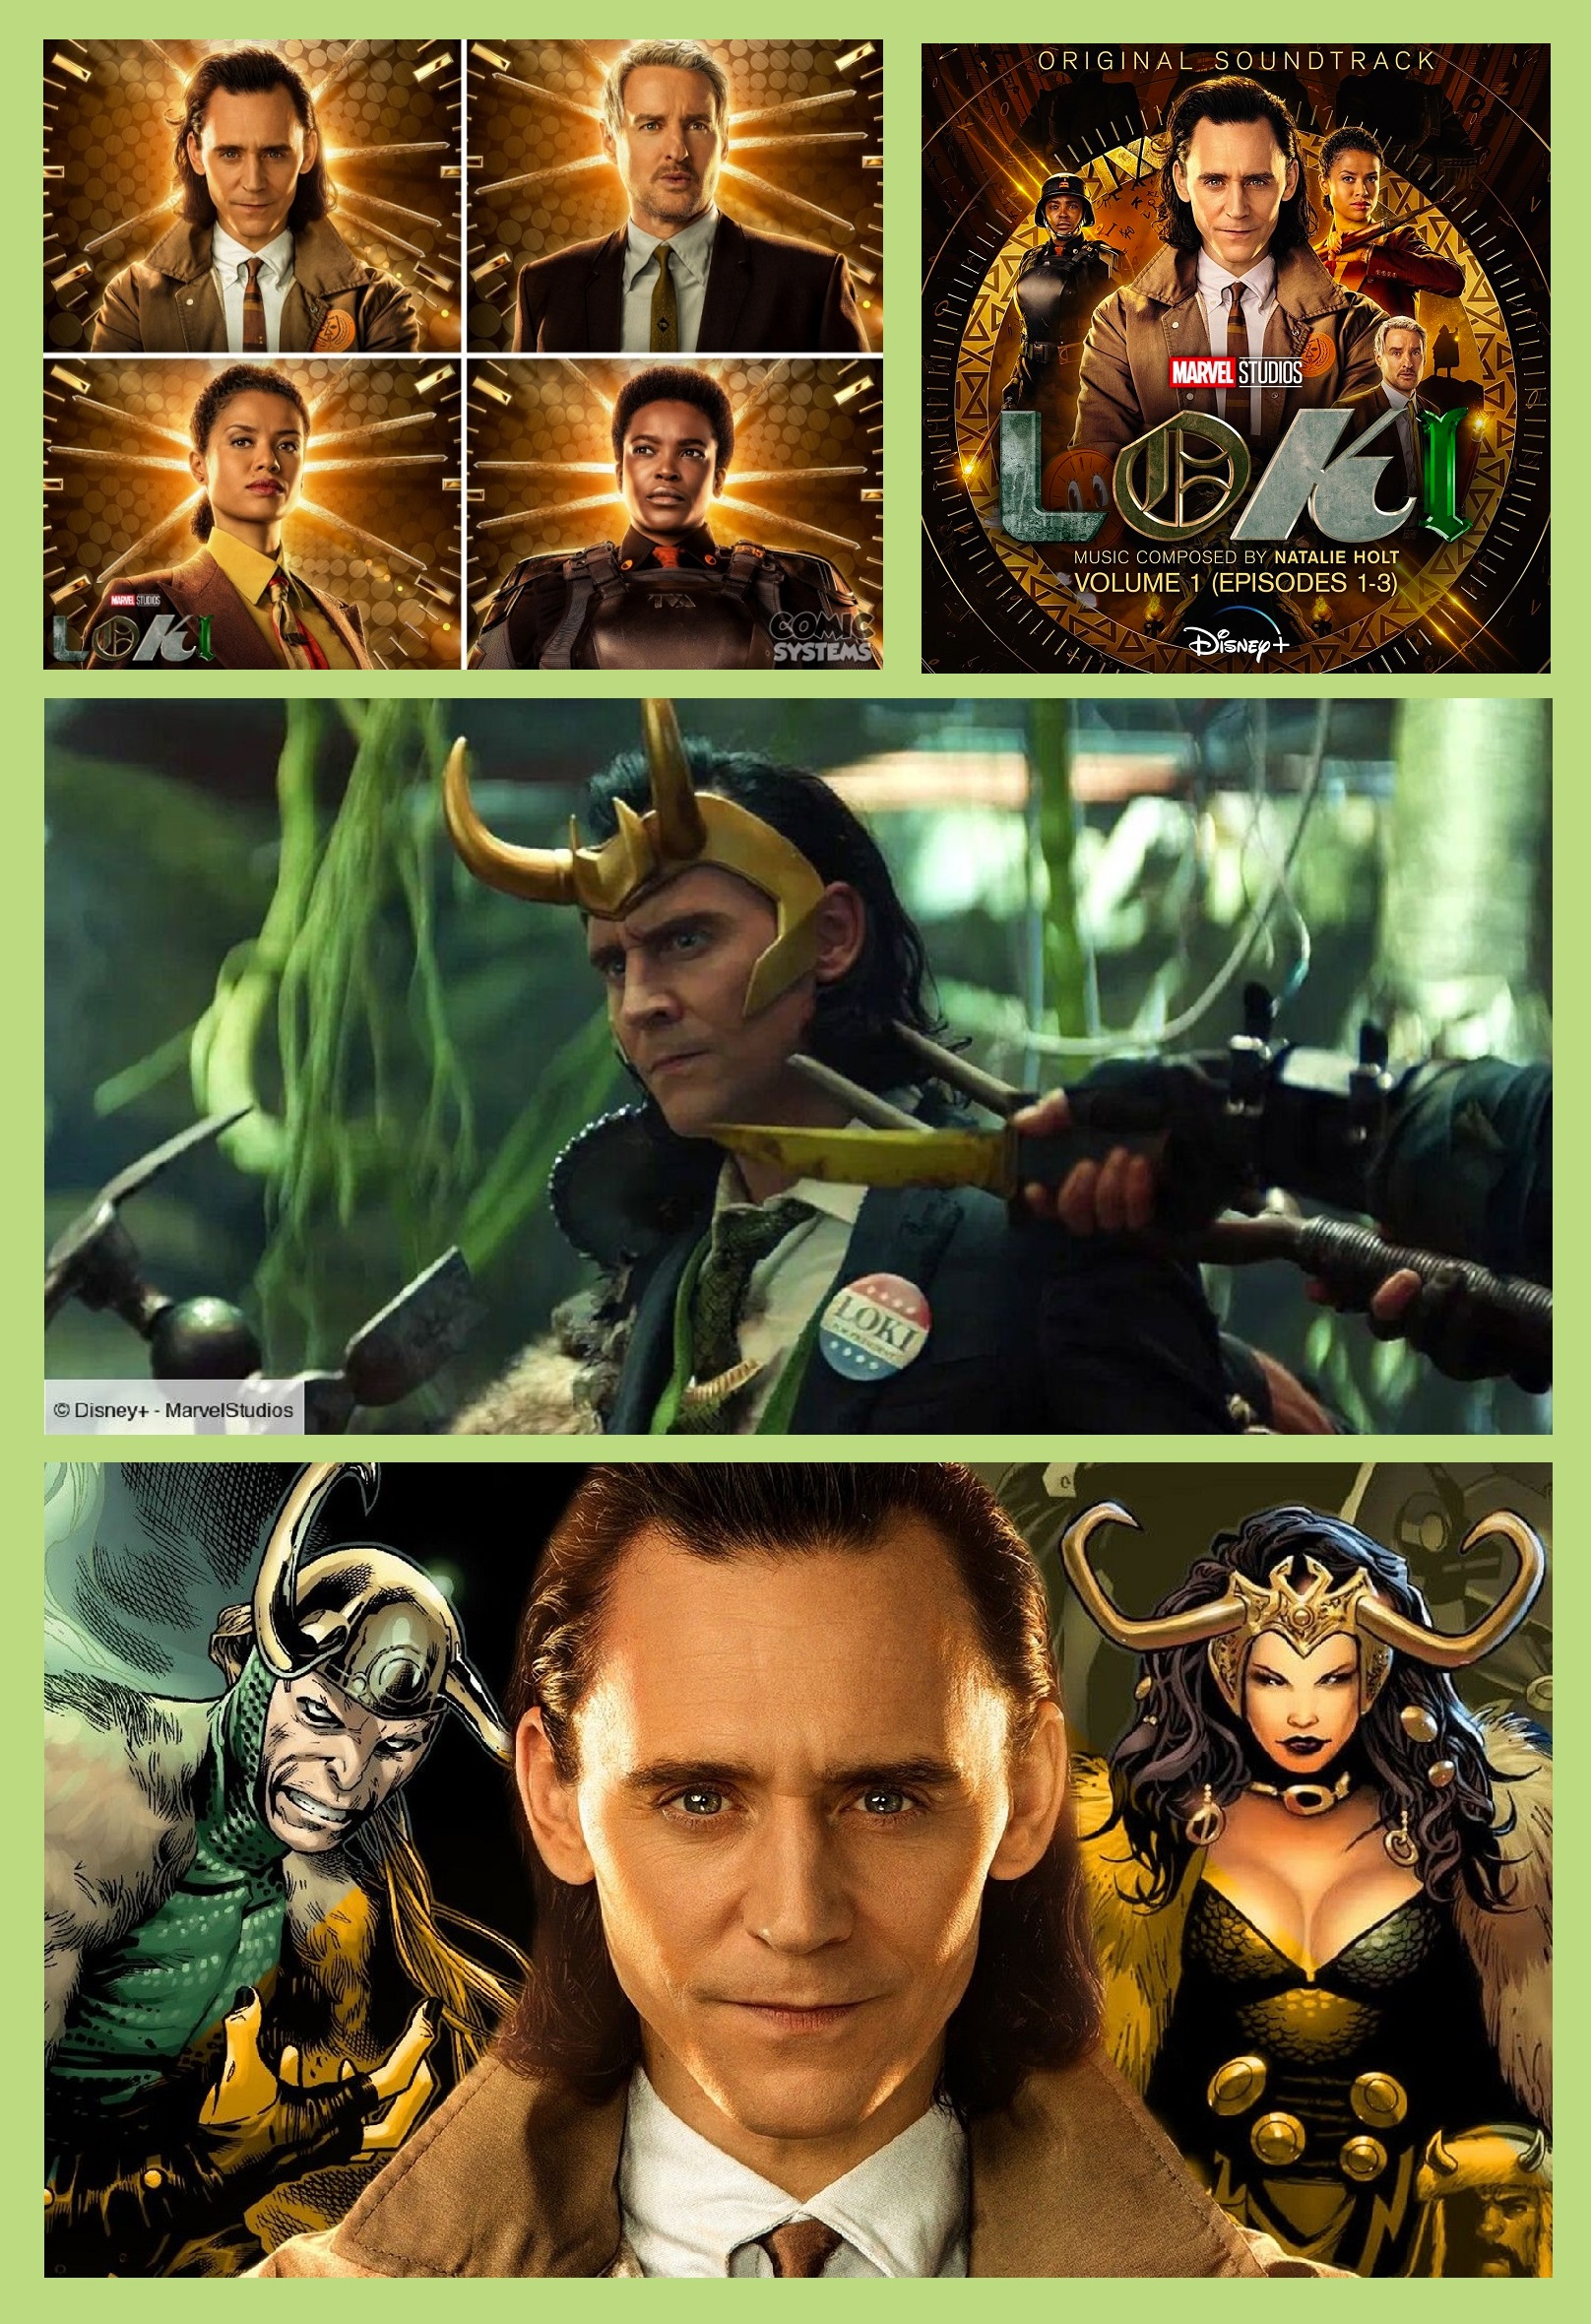 Loki: Vol. 1 - Episodes 1-3